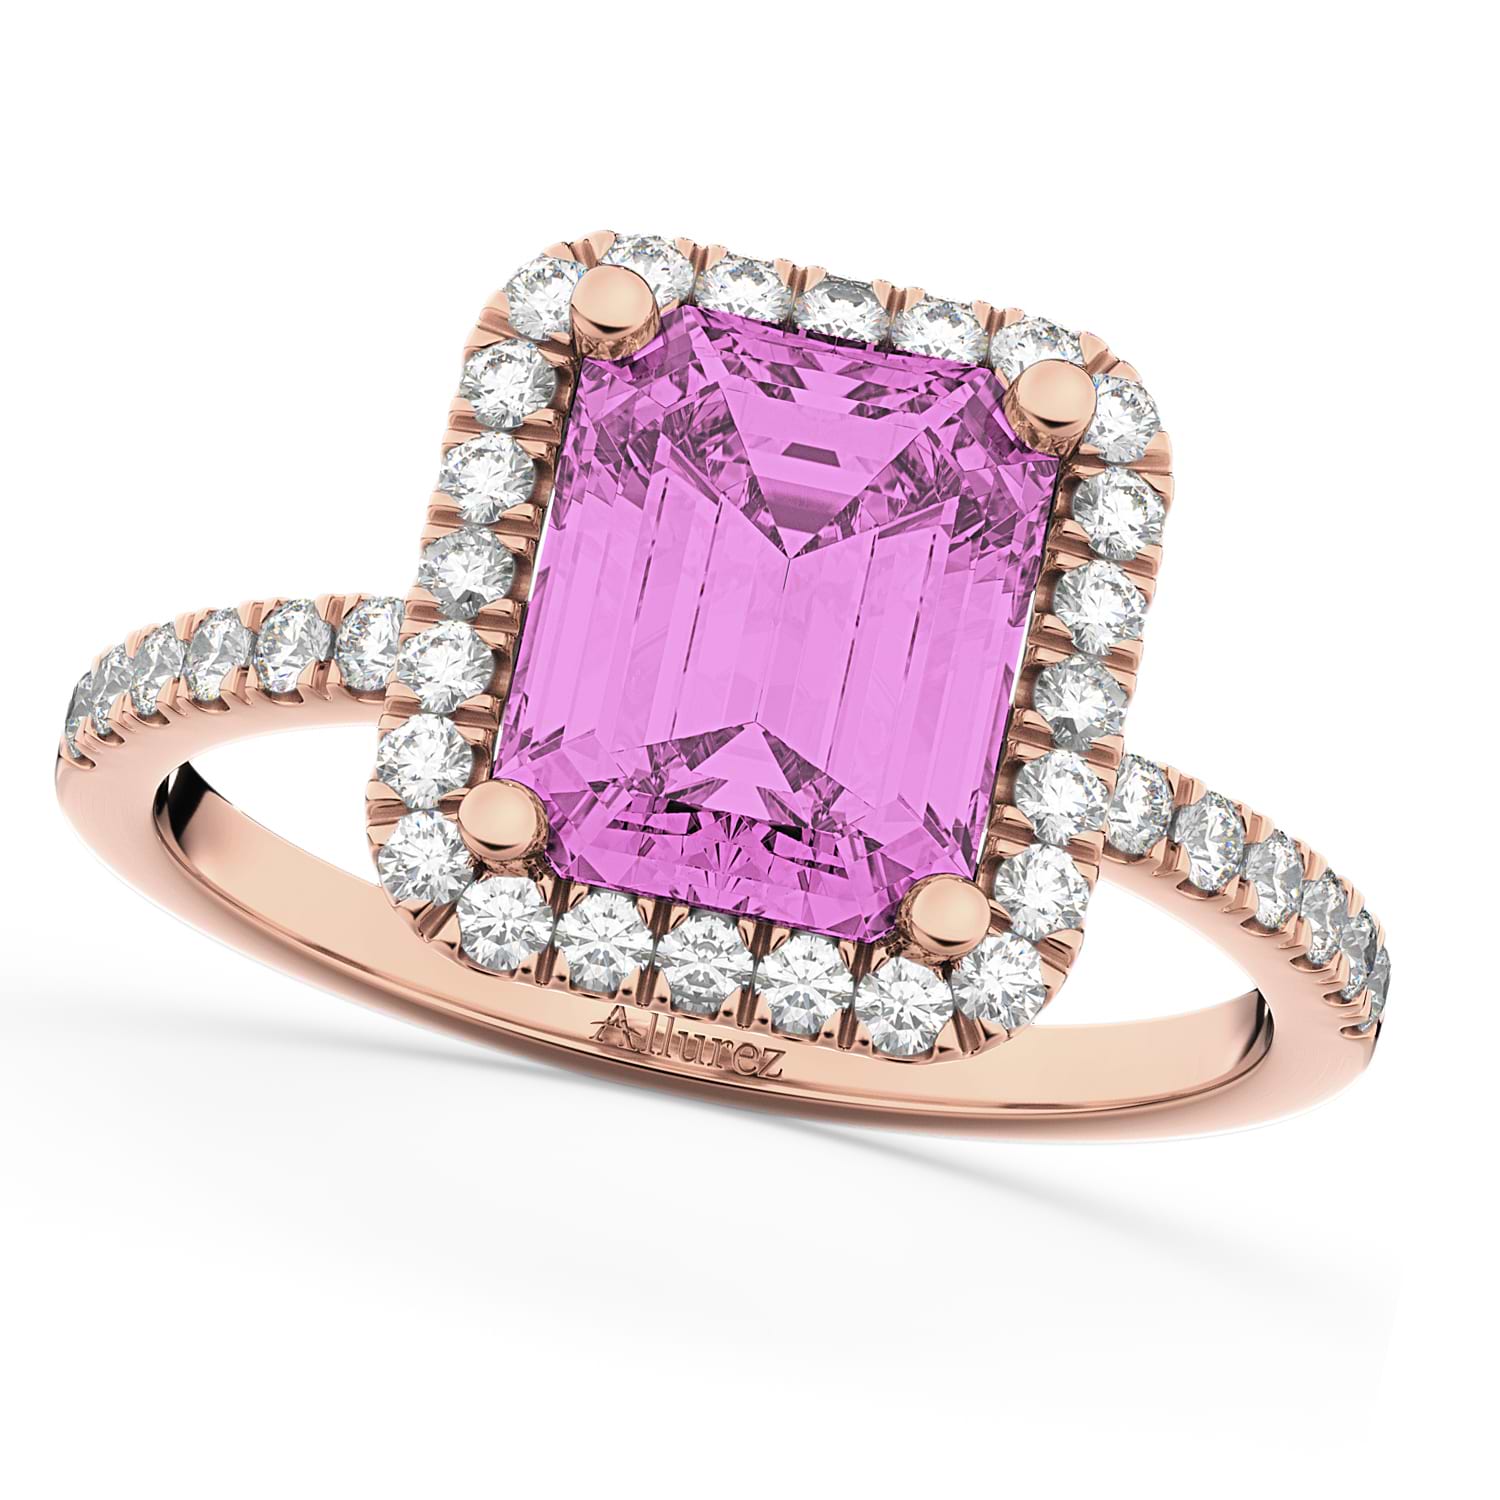 Pink Sapphire & Diamond Engagement Ring 14k Rose Gold (3.32ct)